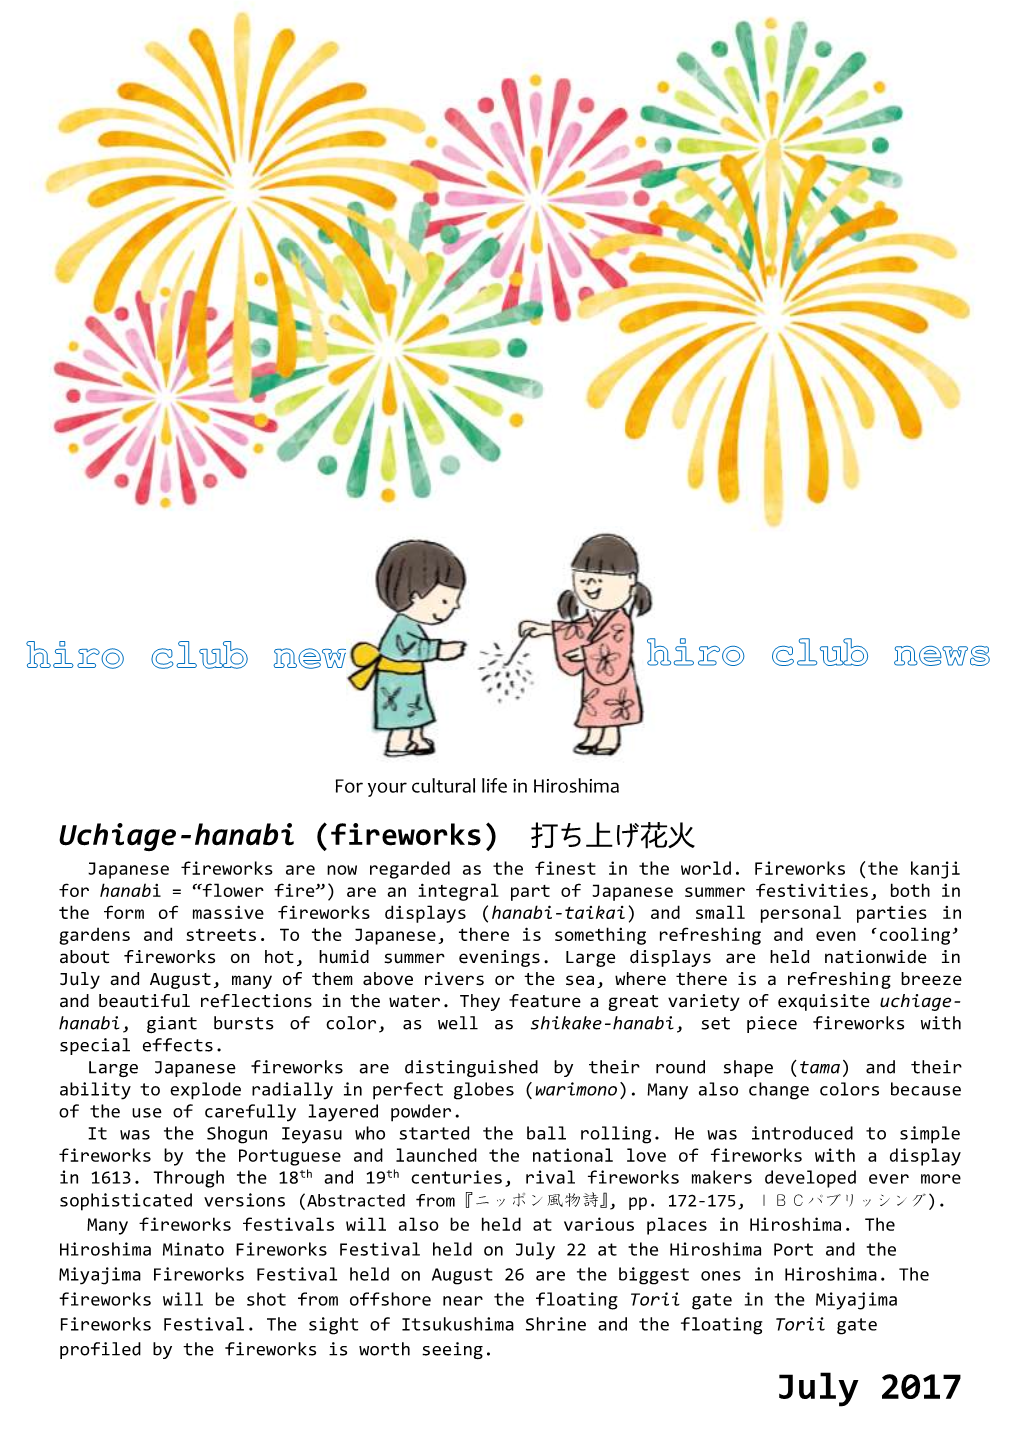 July 2017 Hiro Club News No